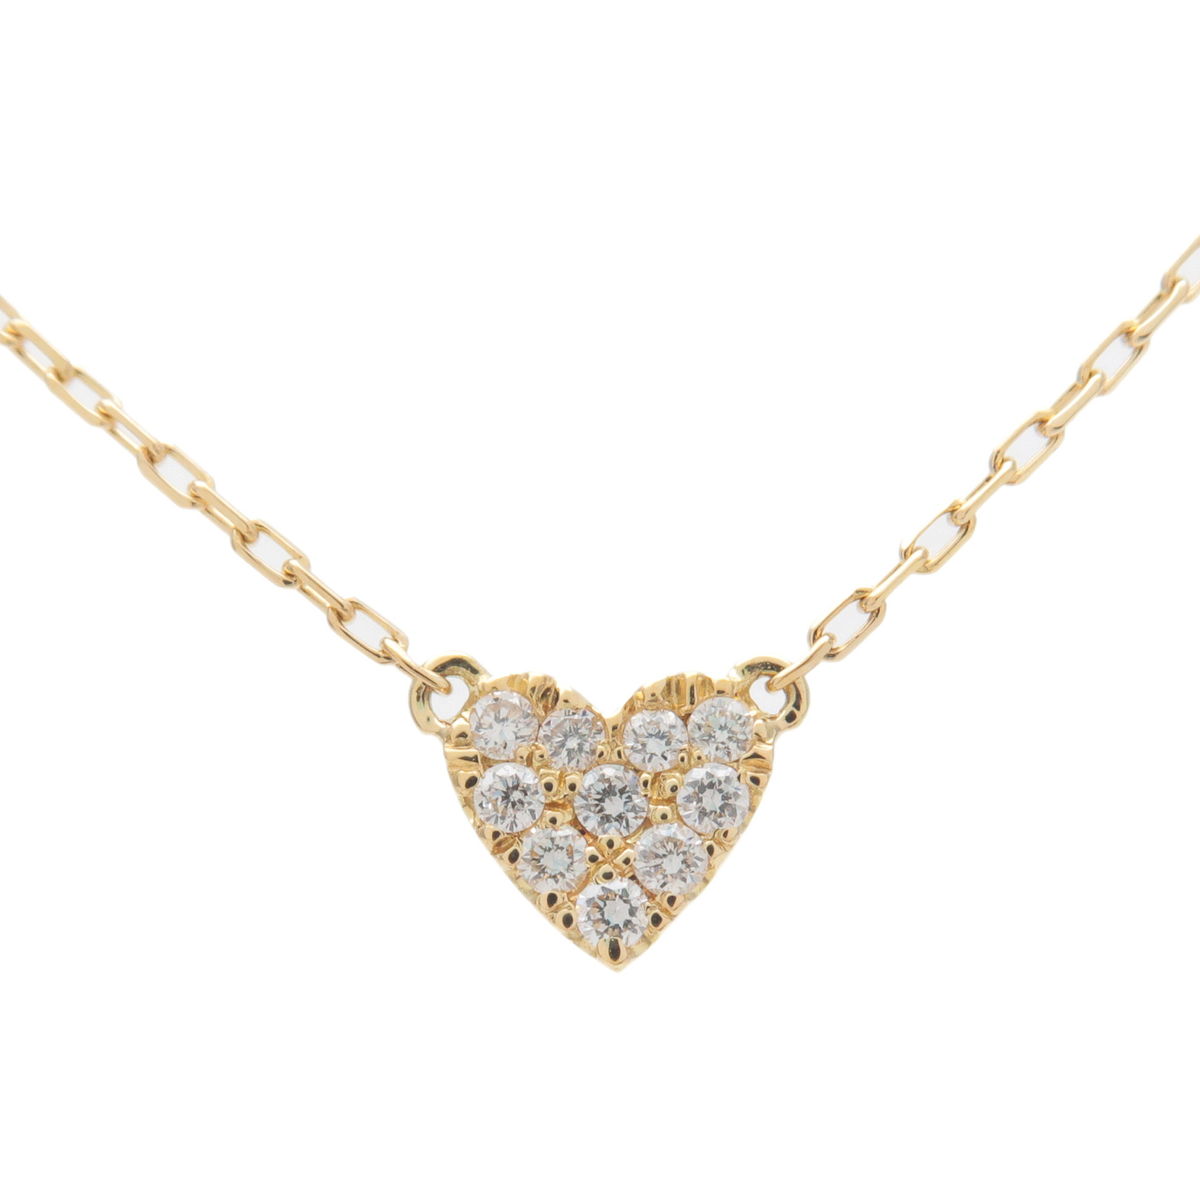 AHKAH-Aker-Heart-Pave-Diamond-Necklace-0.05ct-K18-750-Yellow-Gold